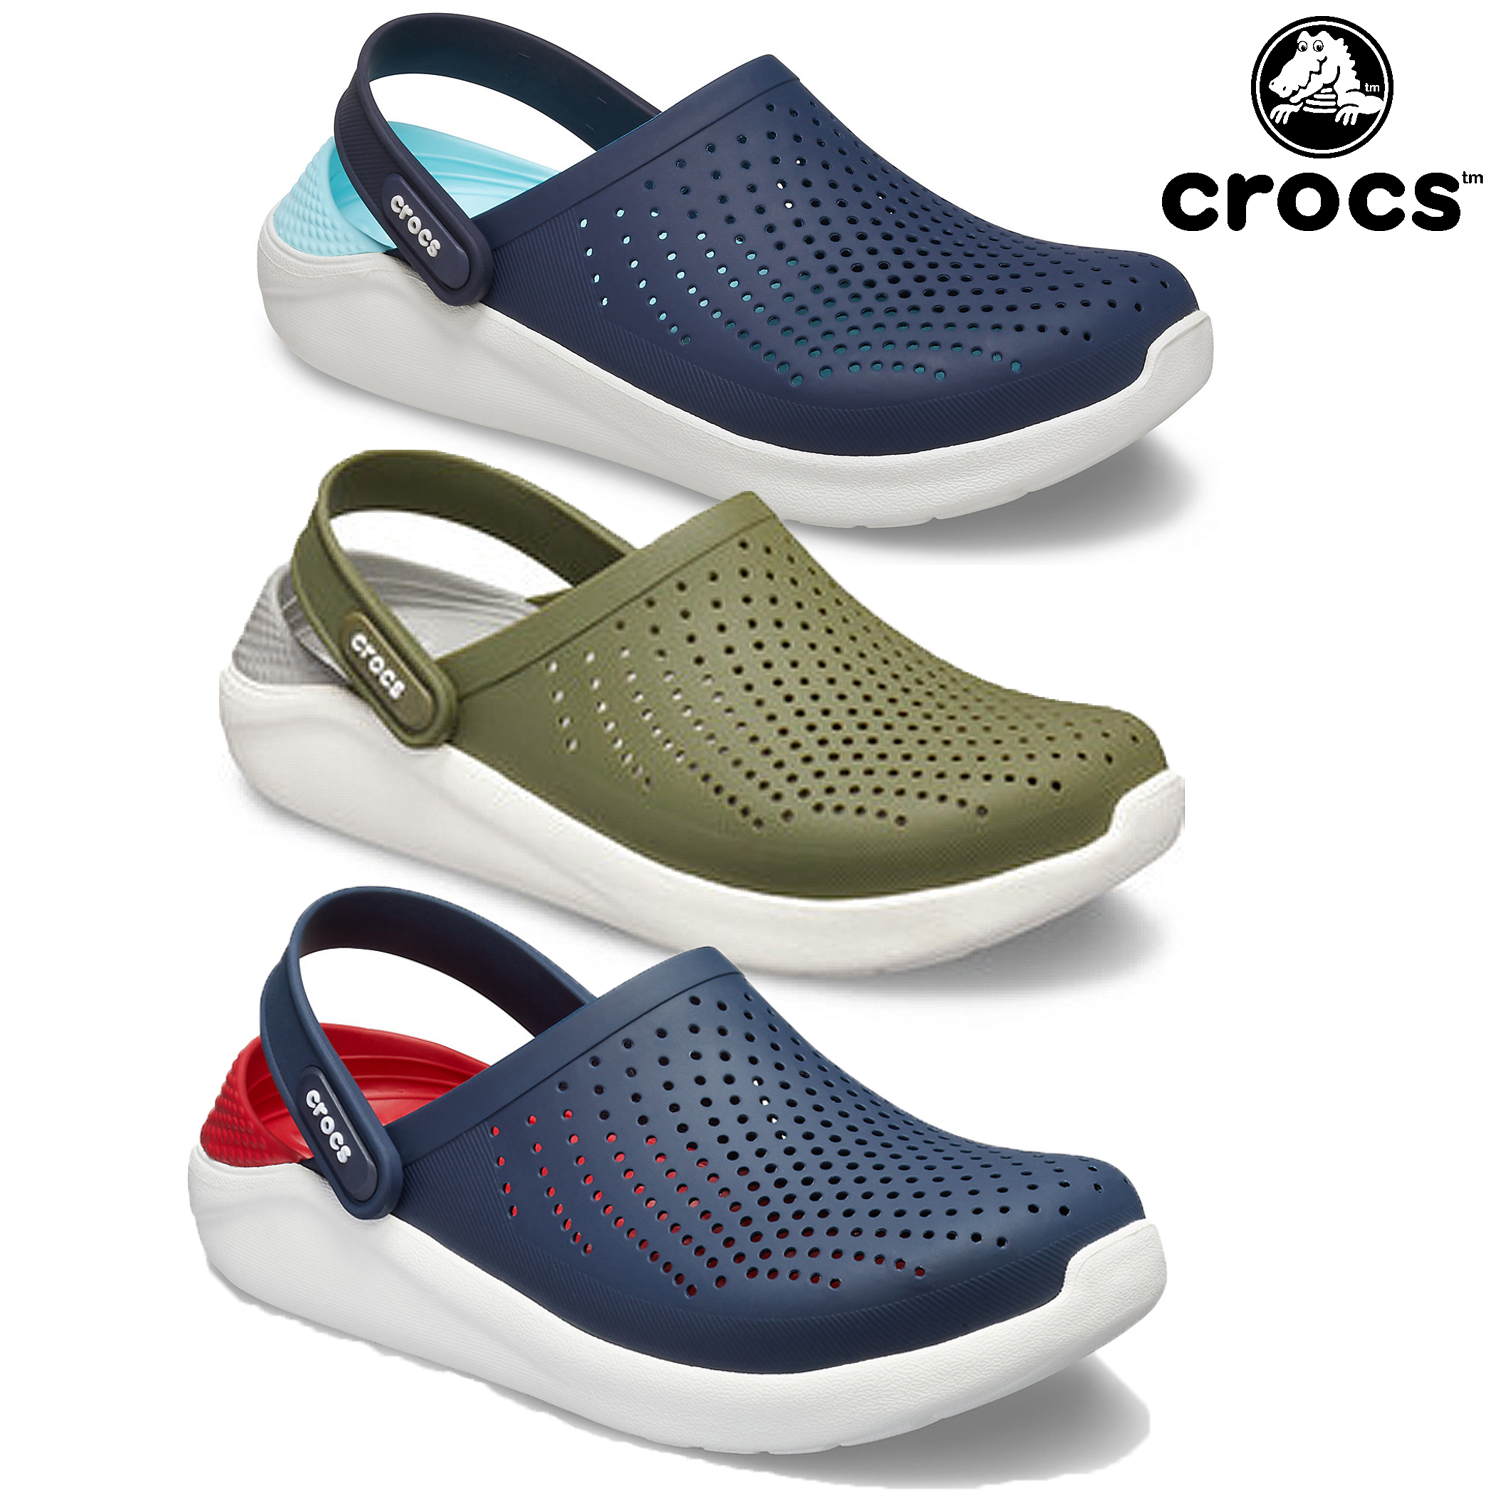 crocs lite riders Online shopping has 